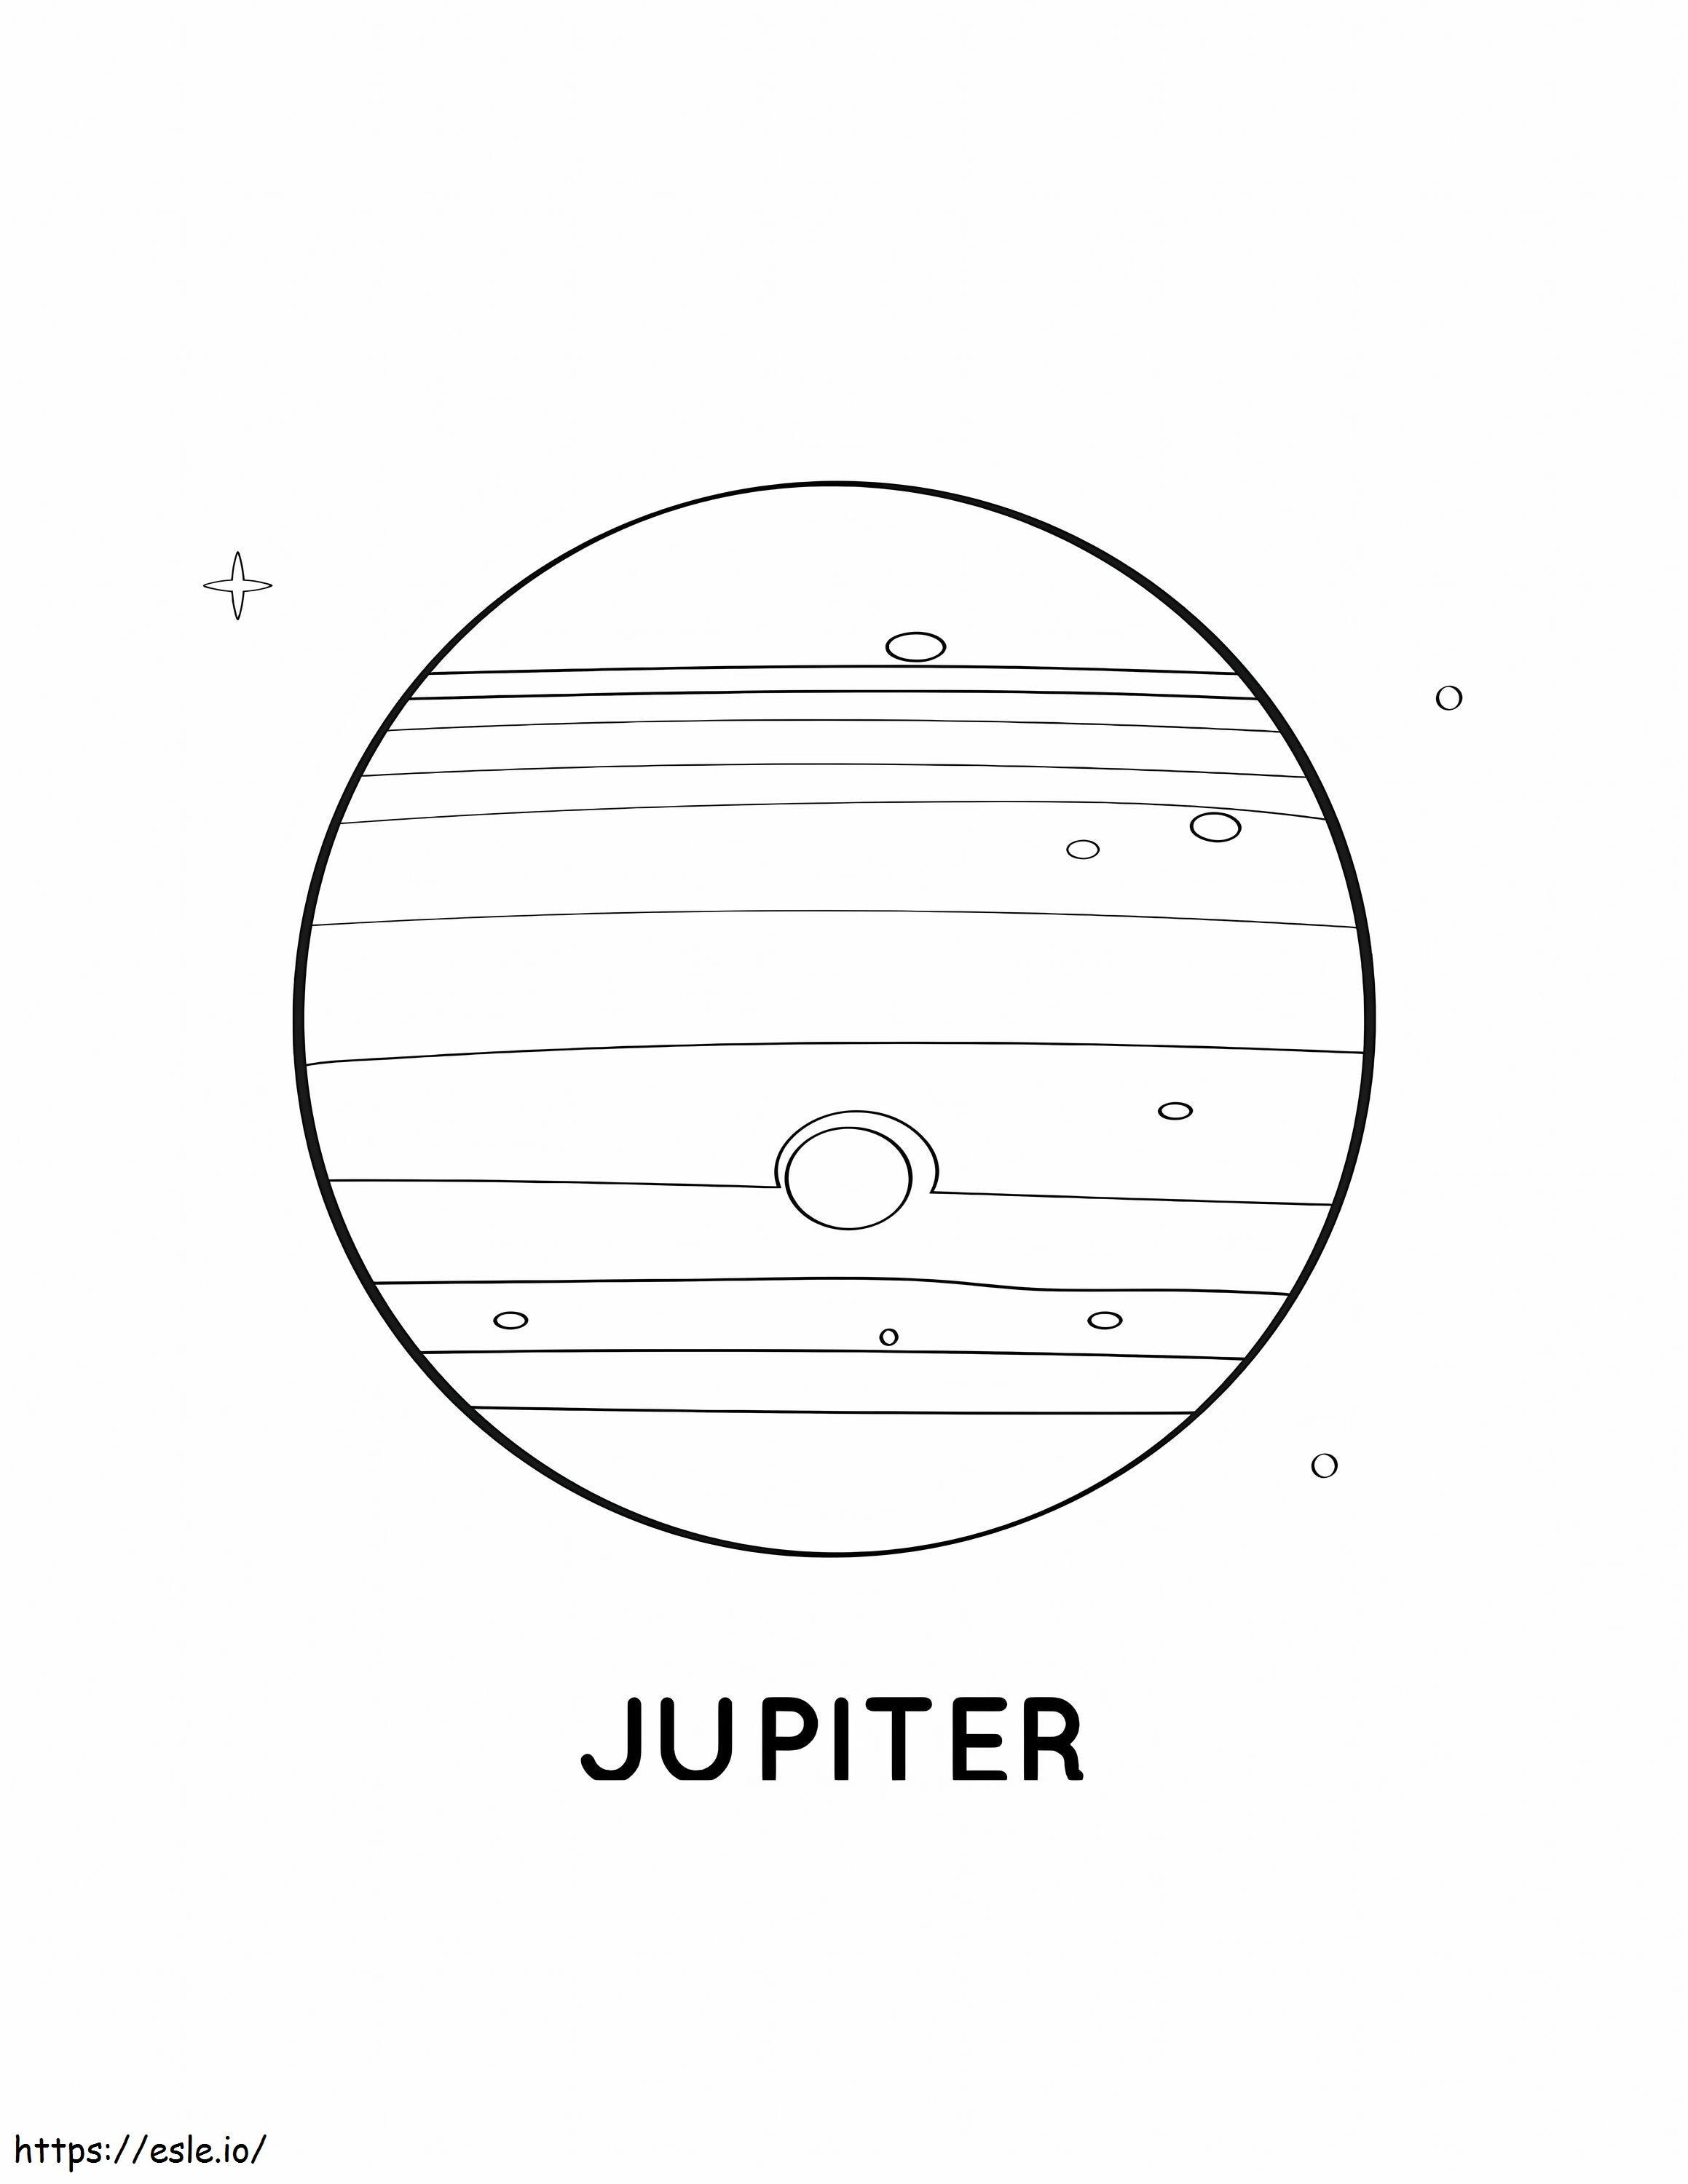 Planeta Júpiter para colorear